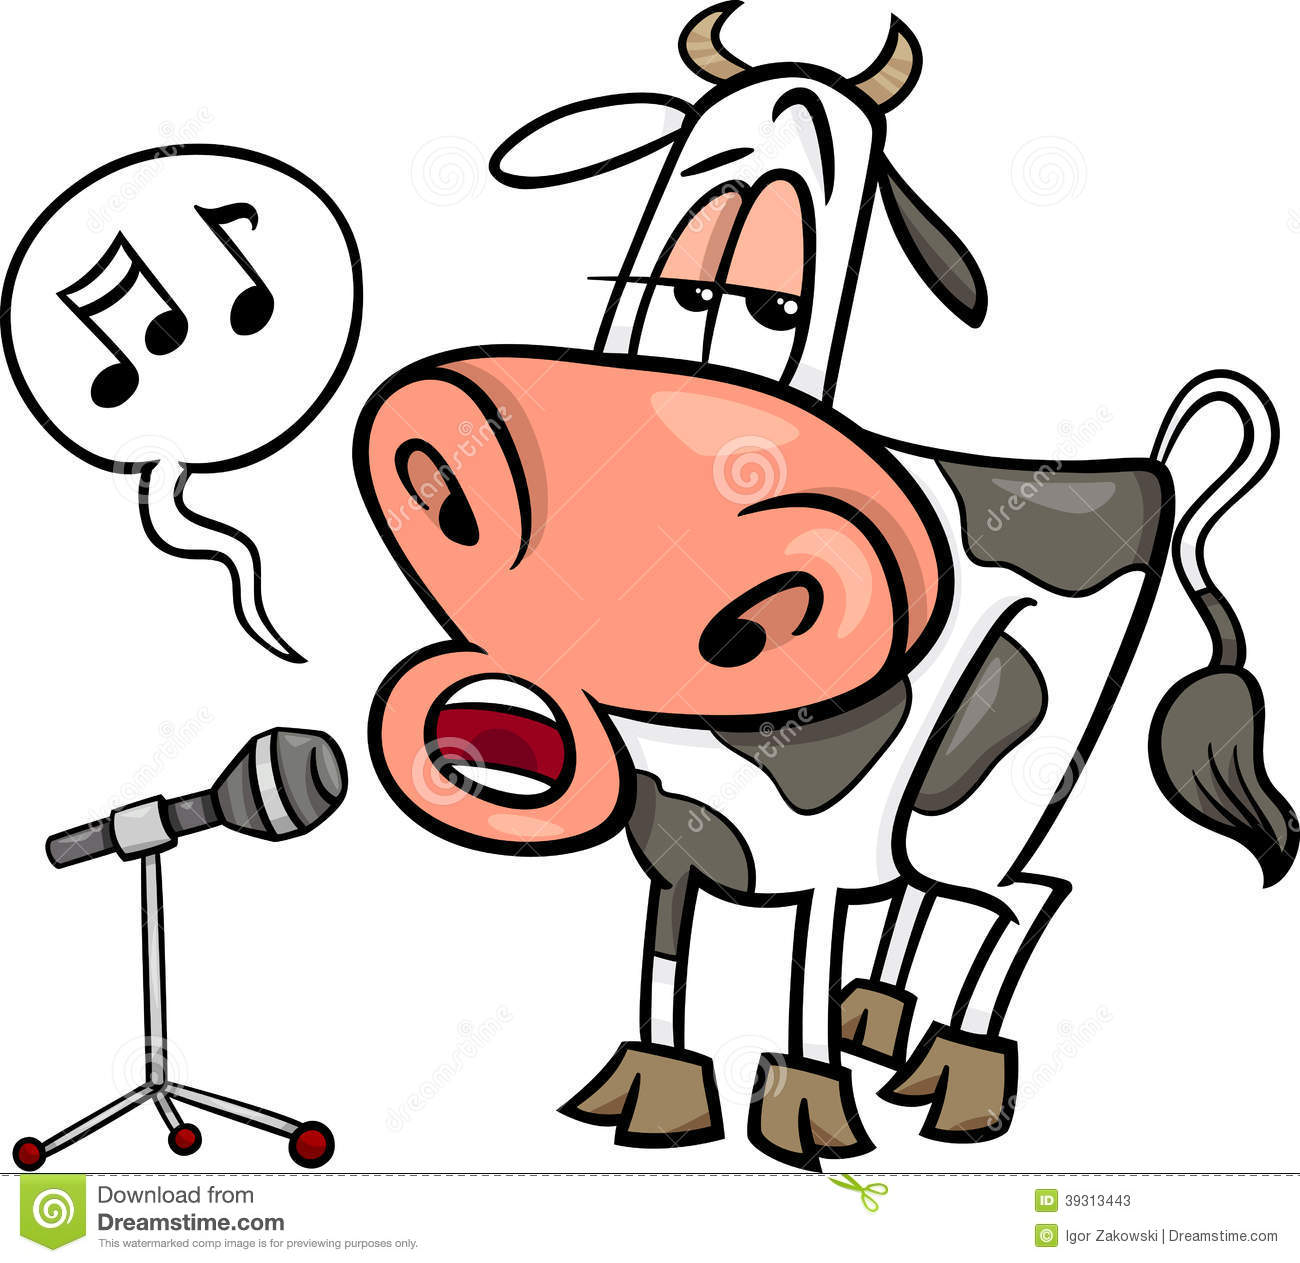 Singing Cow Cartoon Illustration Stock Vector   Image  39313443